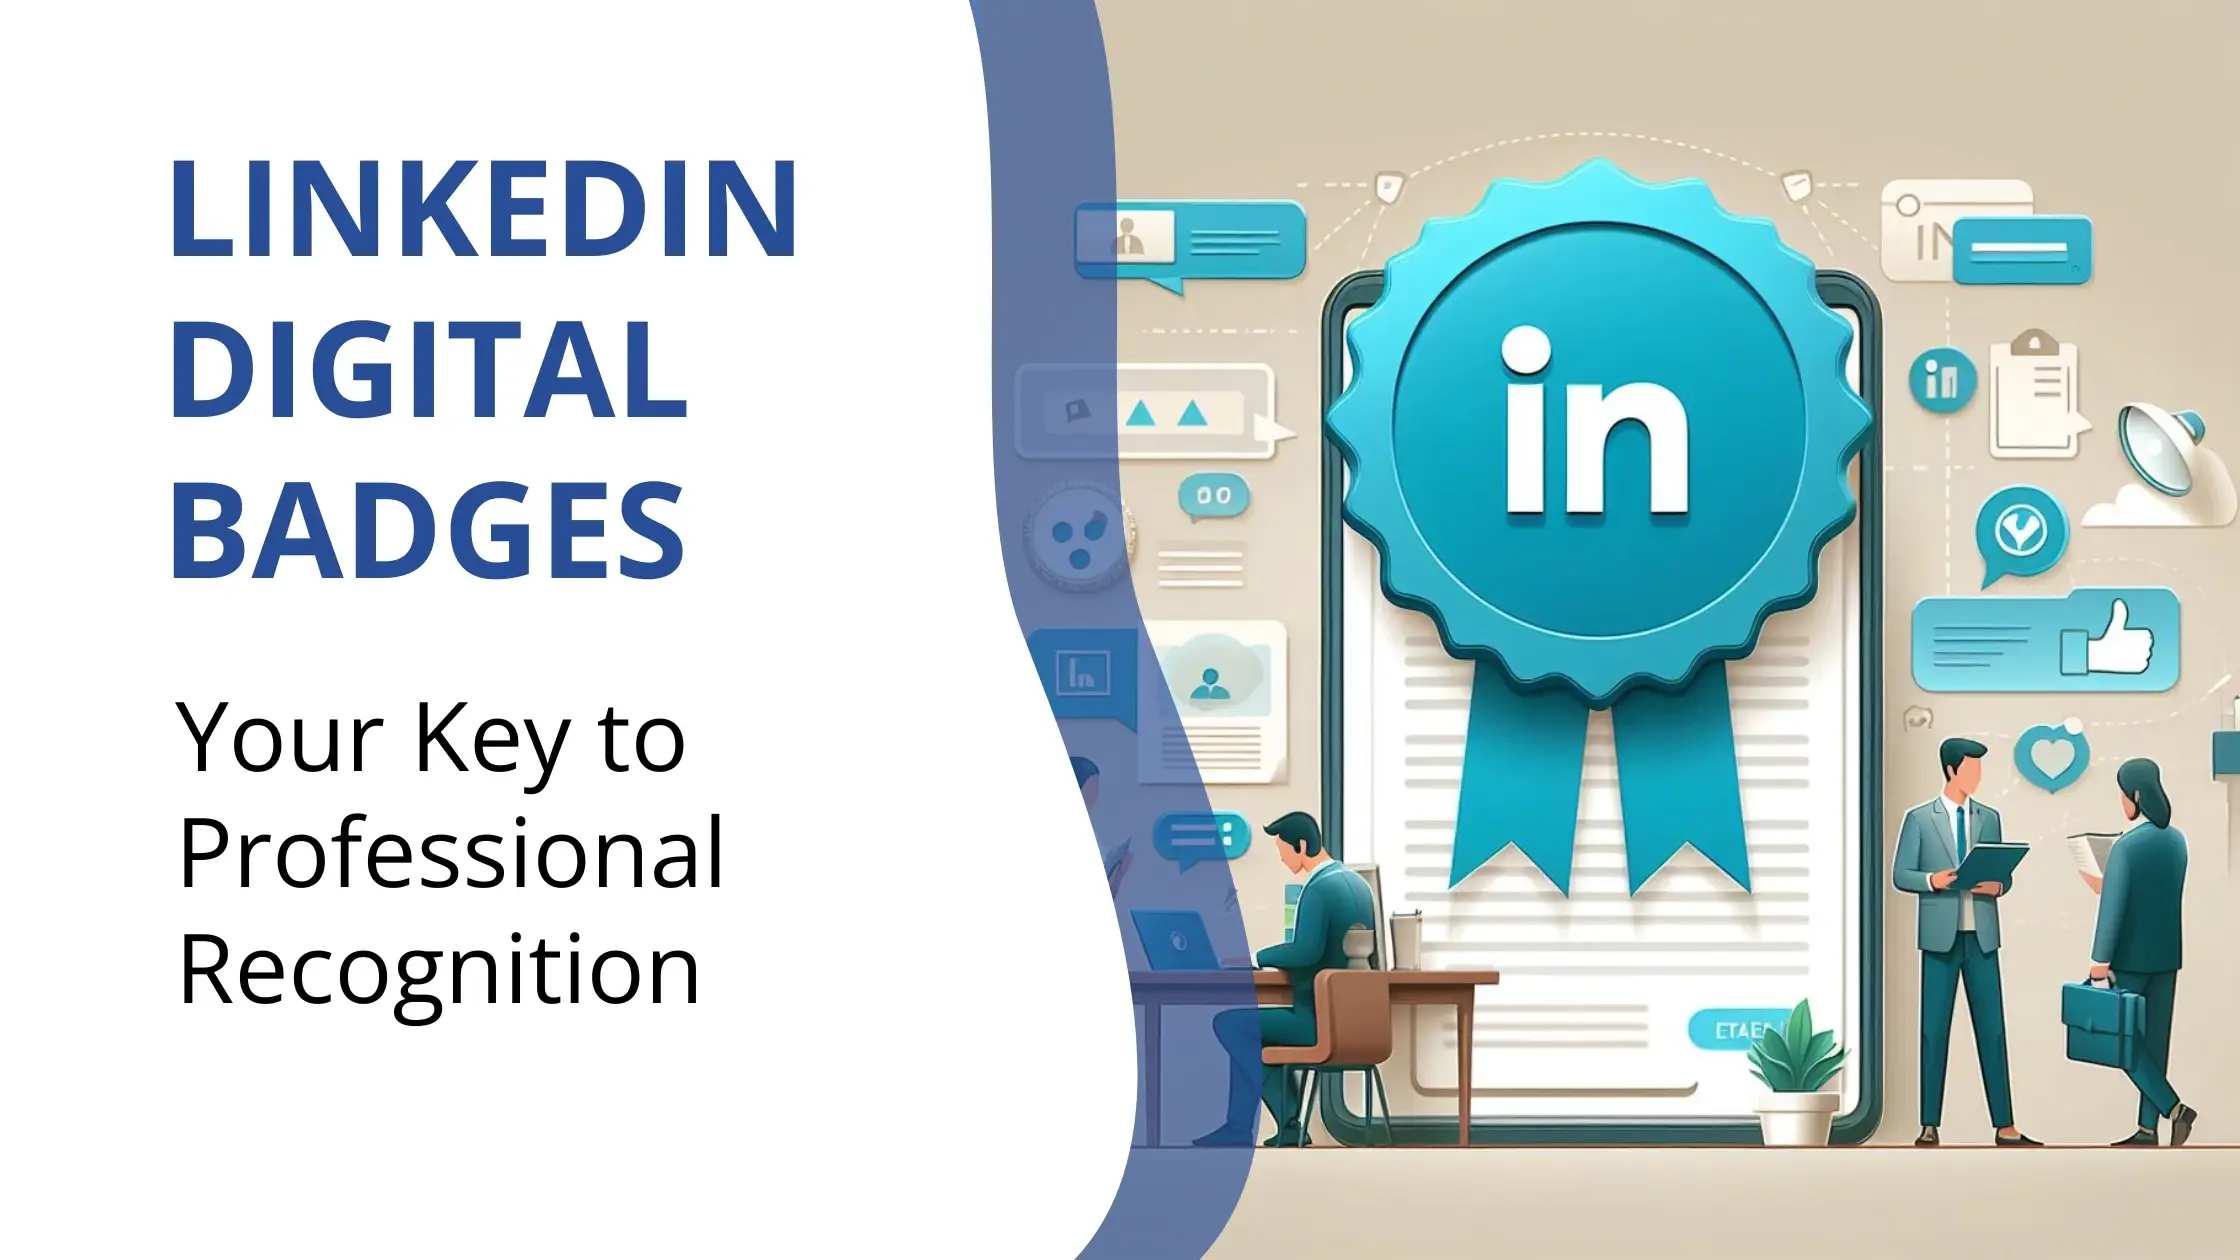 LinkedIn Digital Badges: Your Key to Professional Recognition